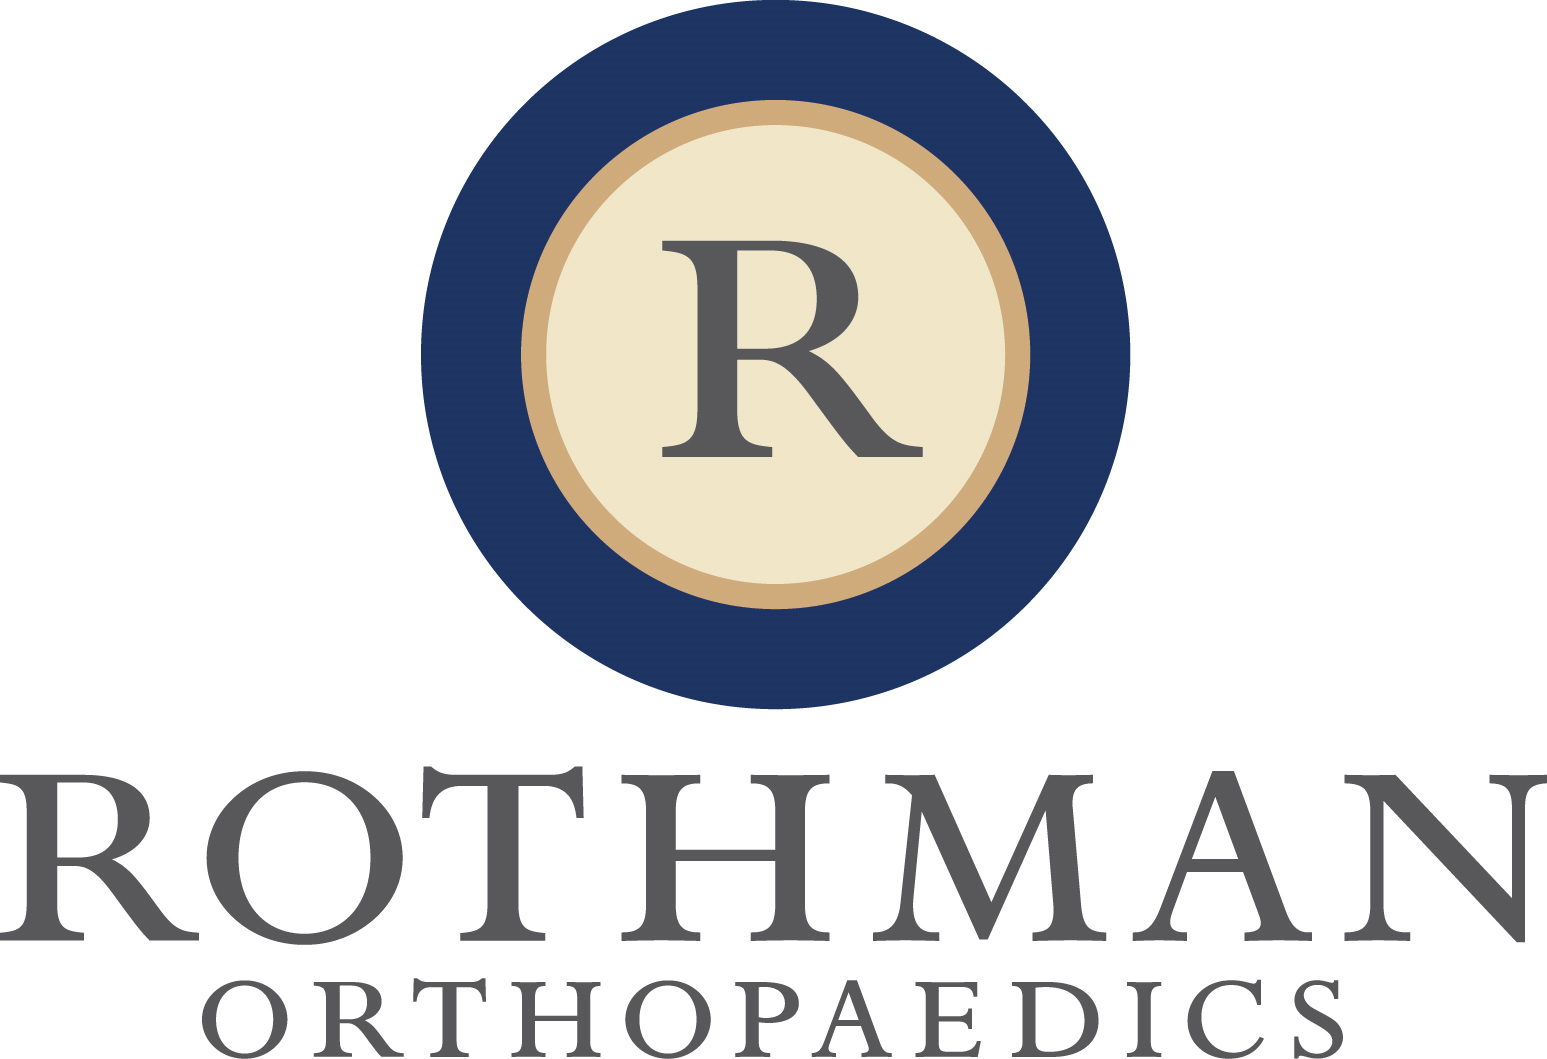 Rothman Orthopaedics Company Logo